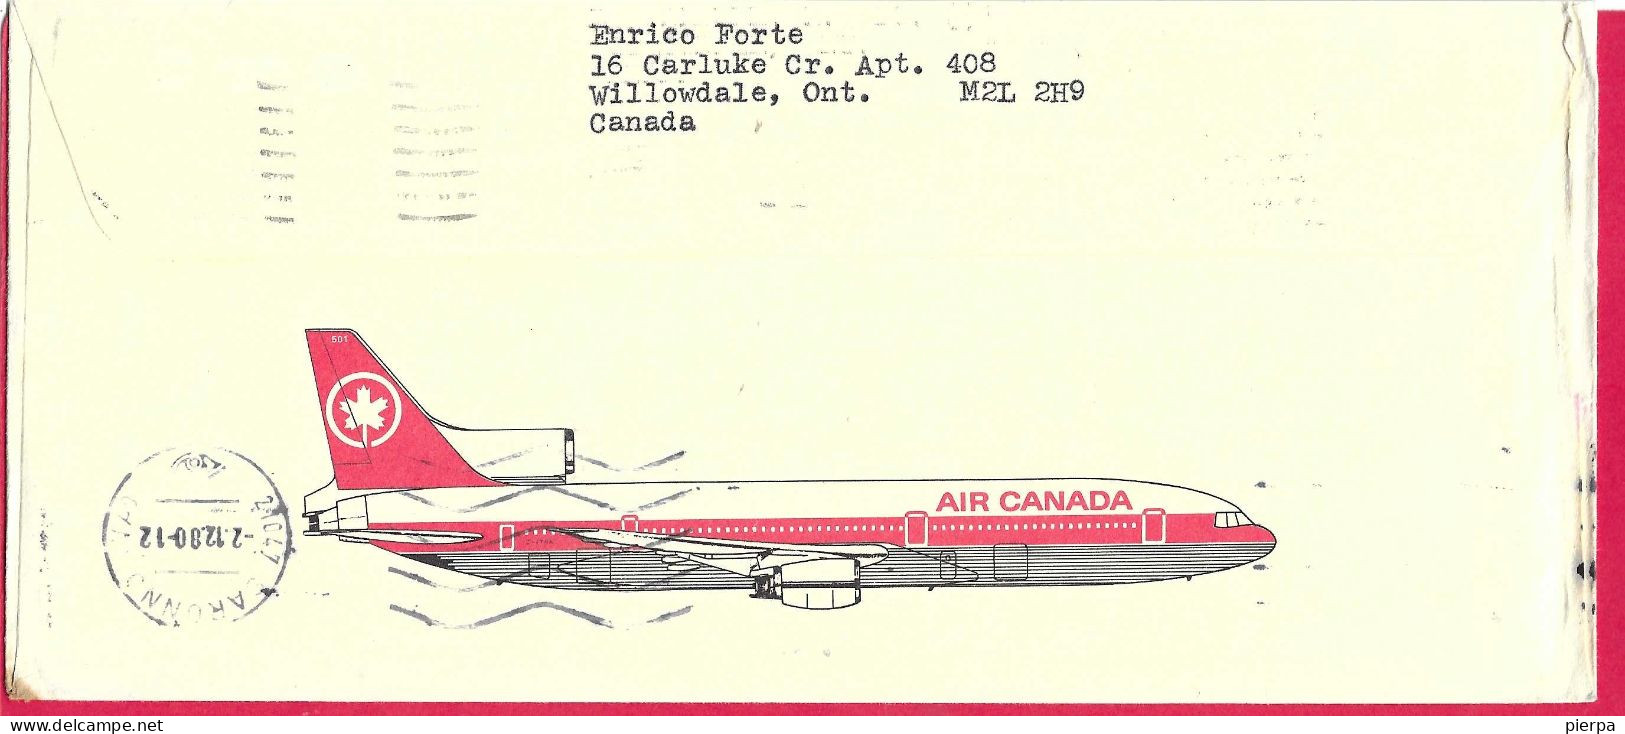 CANADA - BUSTA INTESTATA AIR CANADA - ANNULLO " POSTES CANADA POST*24.XI. 1980" SU BUSTA COMMERCIALE - Luchtpost